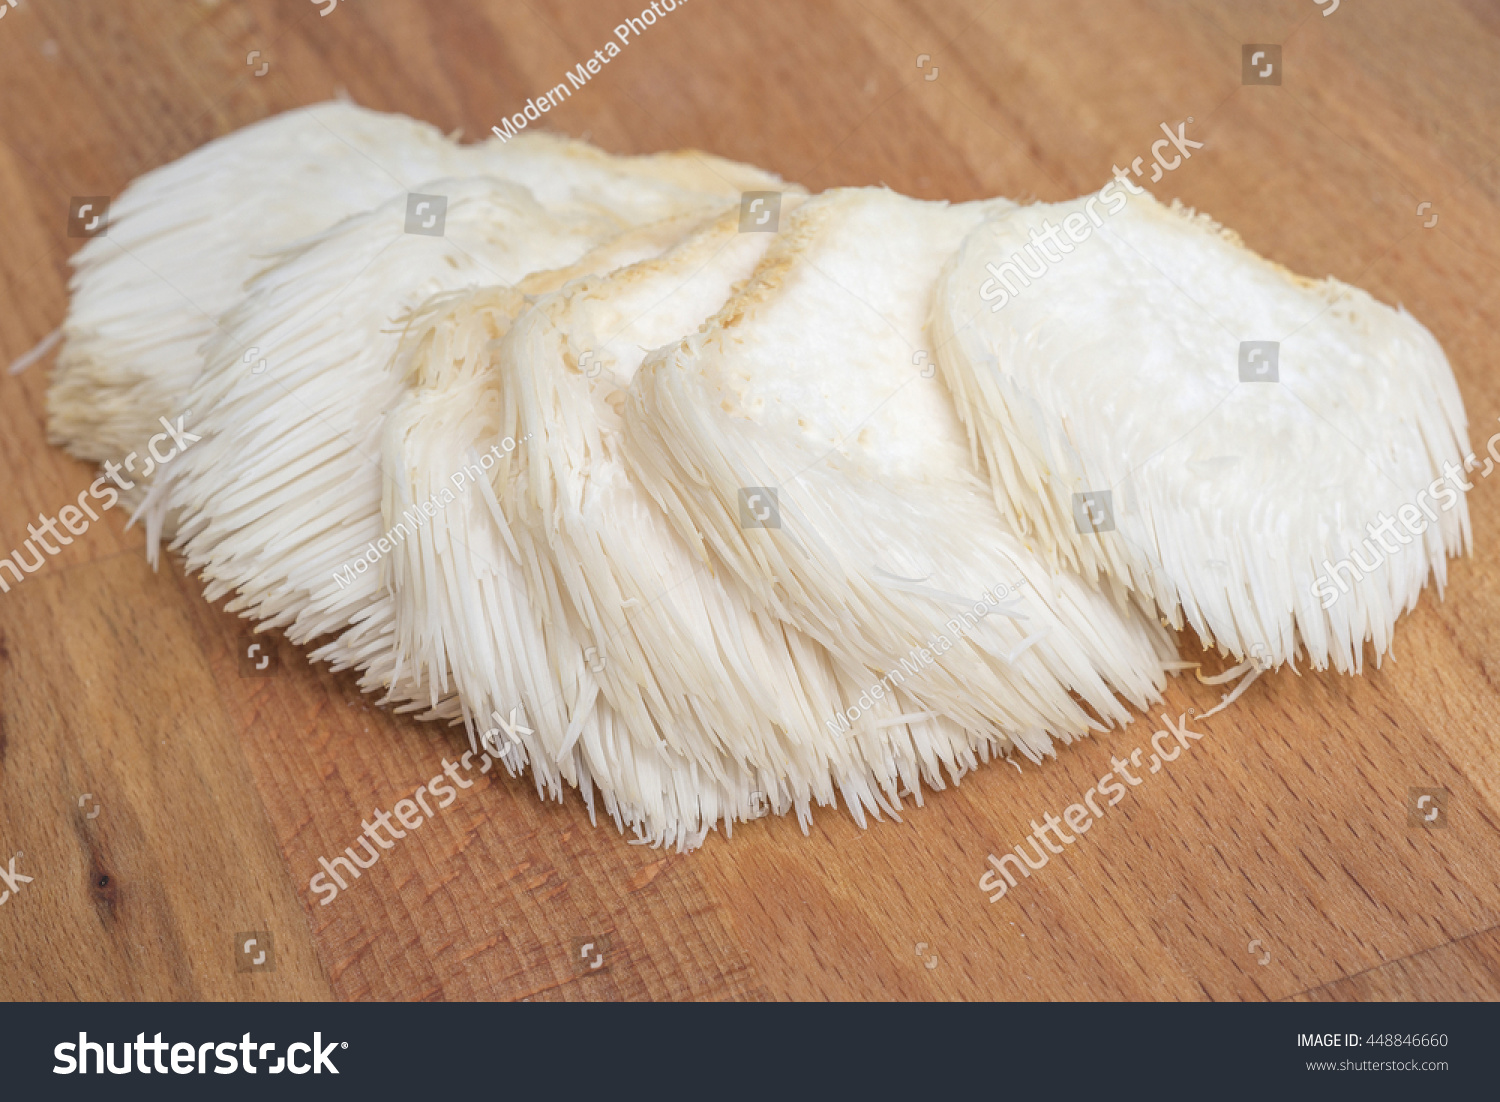 Whole lion's mane / bearded tooth / pom pom / hedgehog mushroom  #448846660